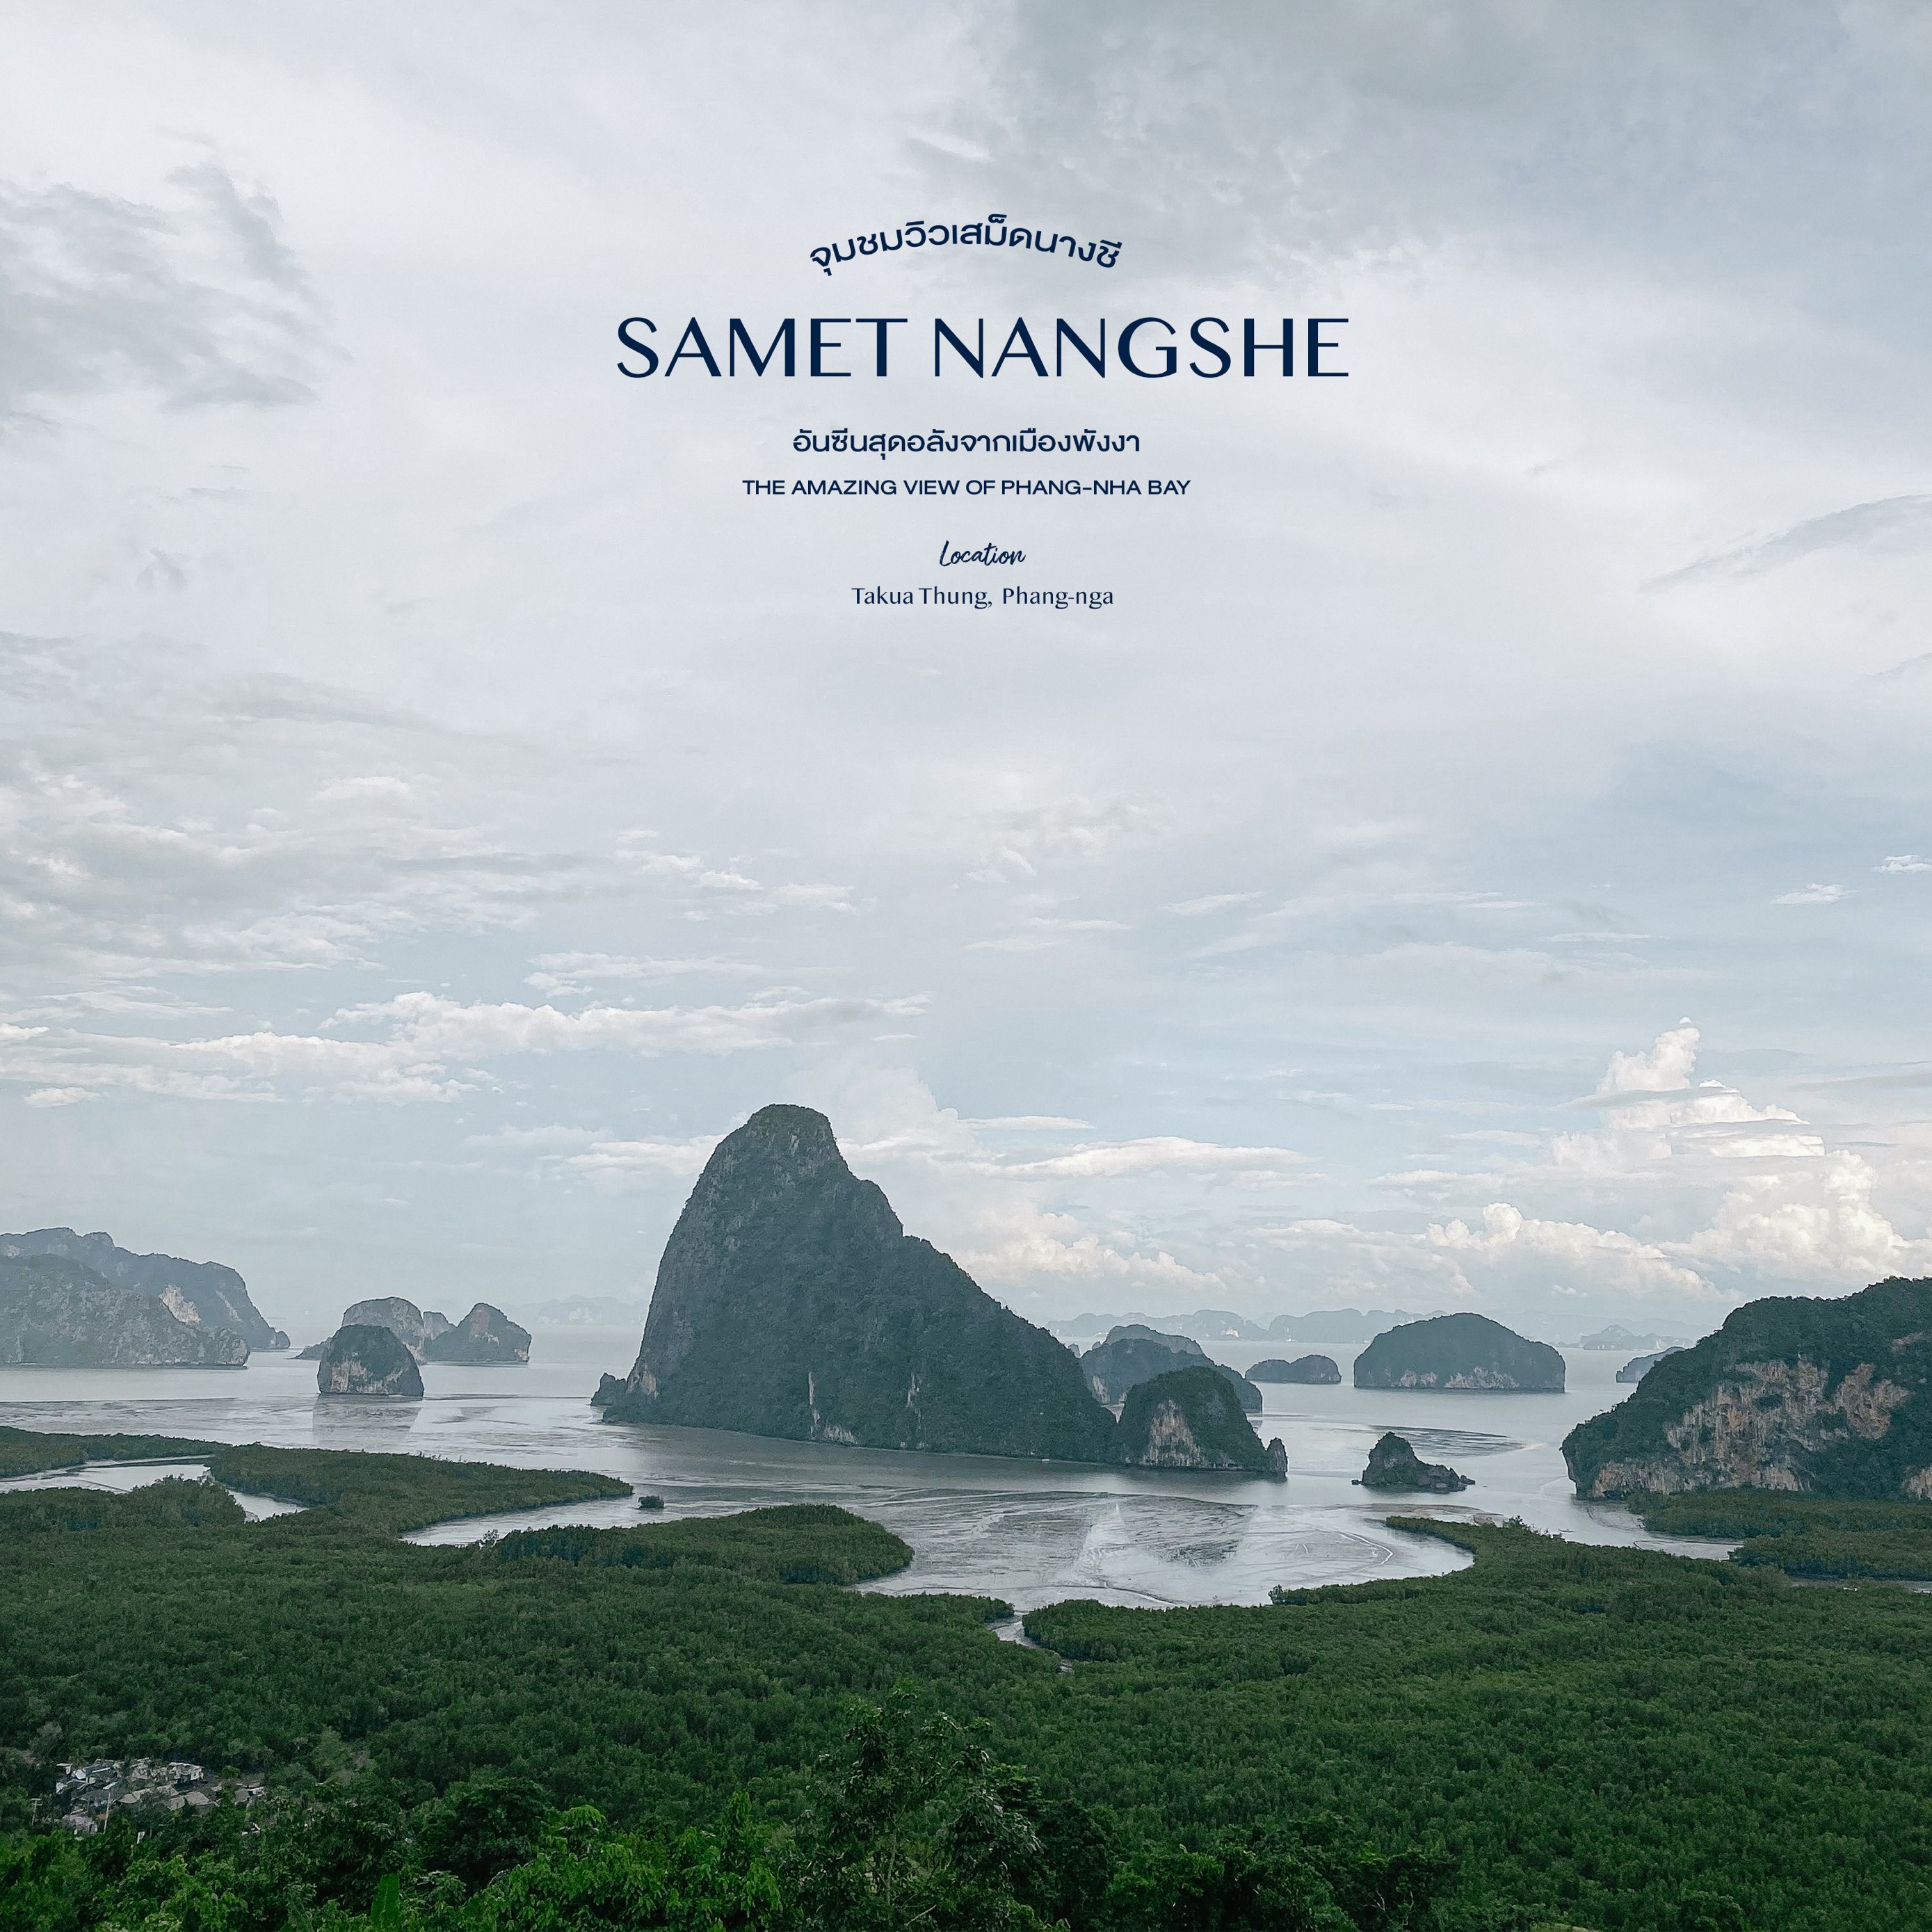 Samet Nangshe 观景点 - 攀牙湾的最佳UNSEEN